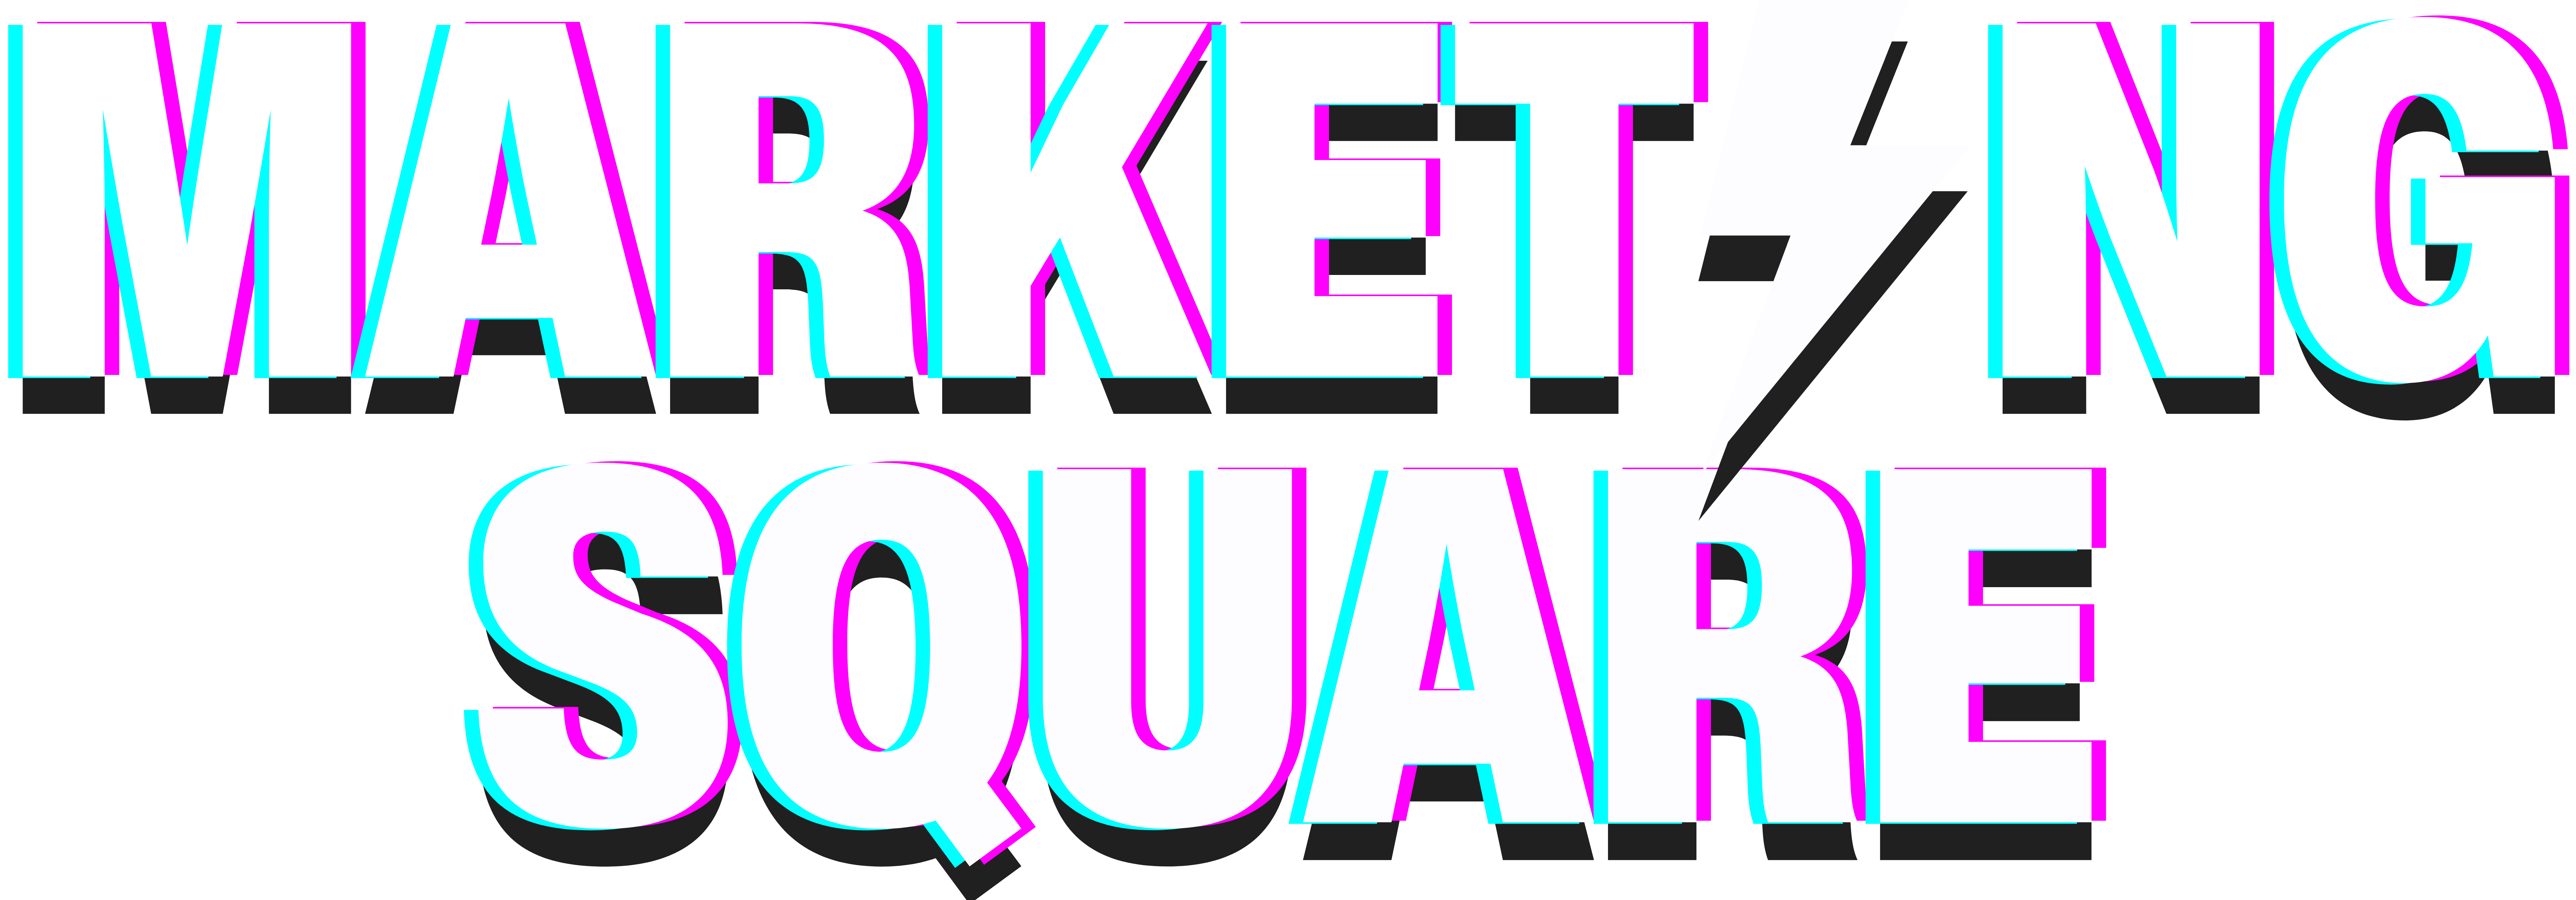 Marketing Square Logo-1